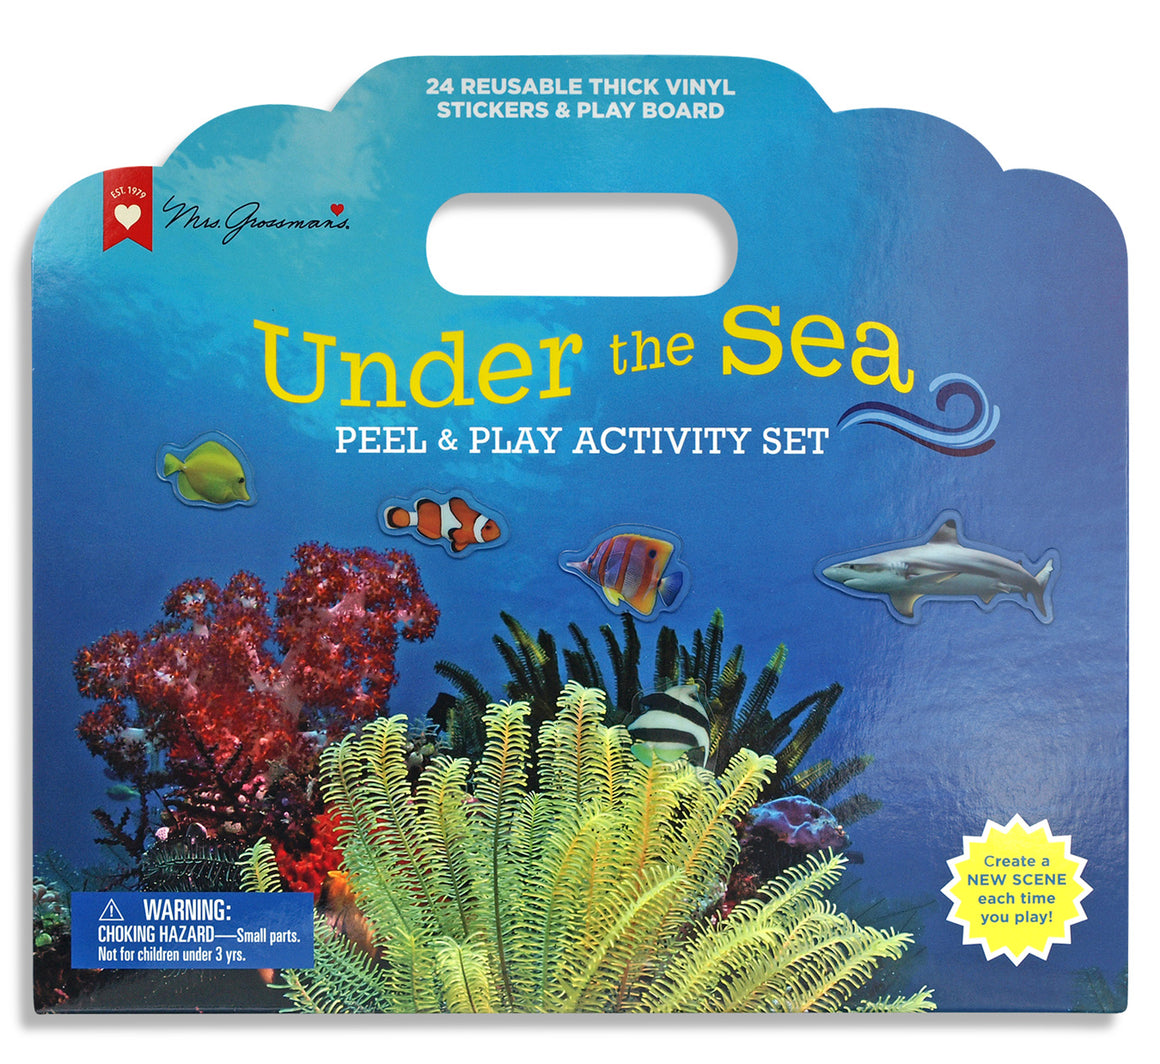 Under the Sea Peel & Play Sticker Activity Set - Mrs. Grossman's